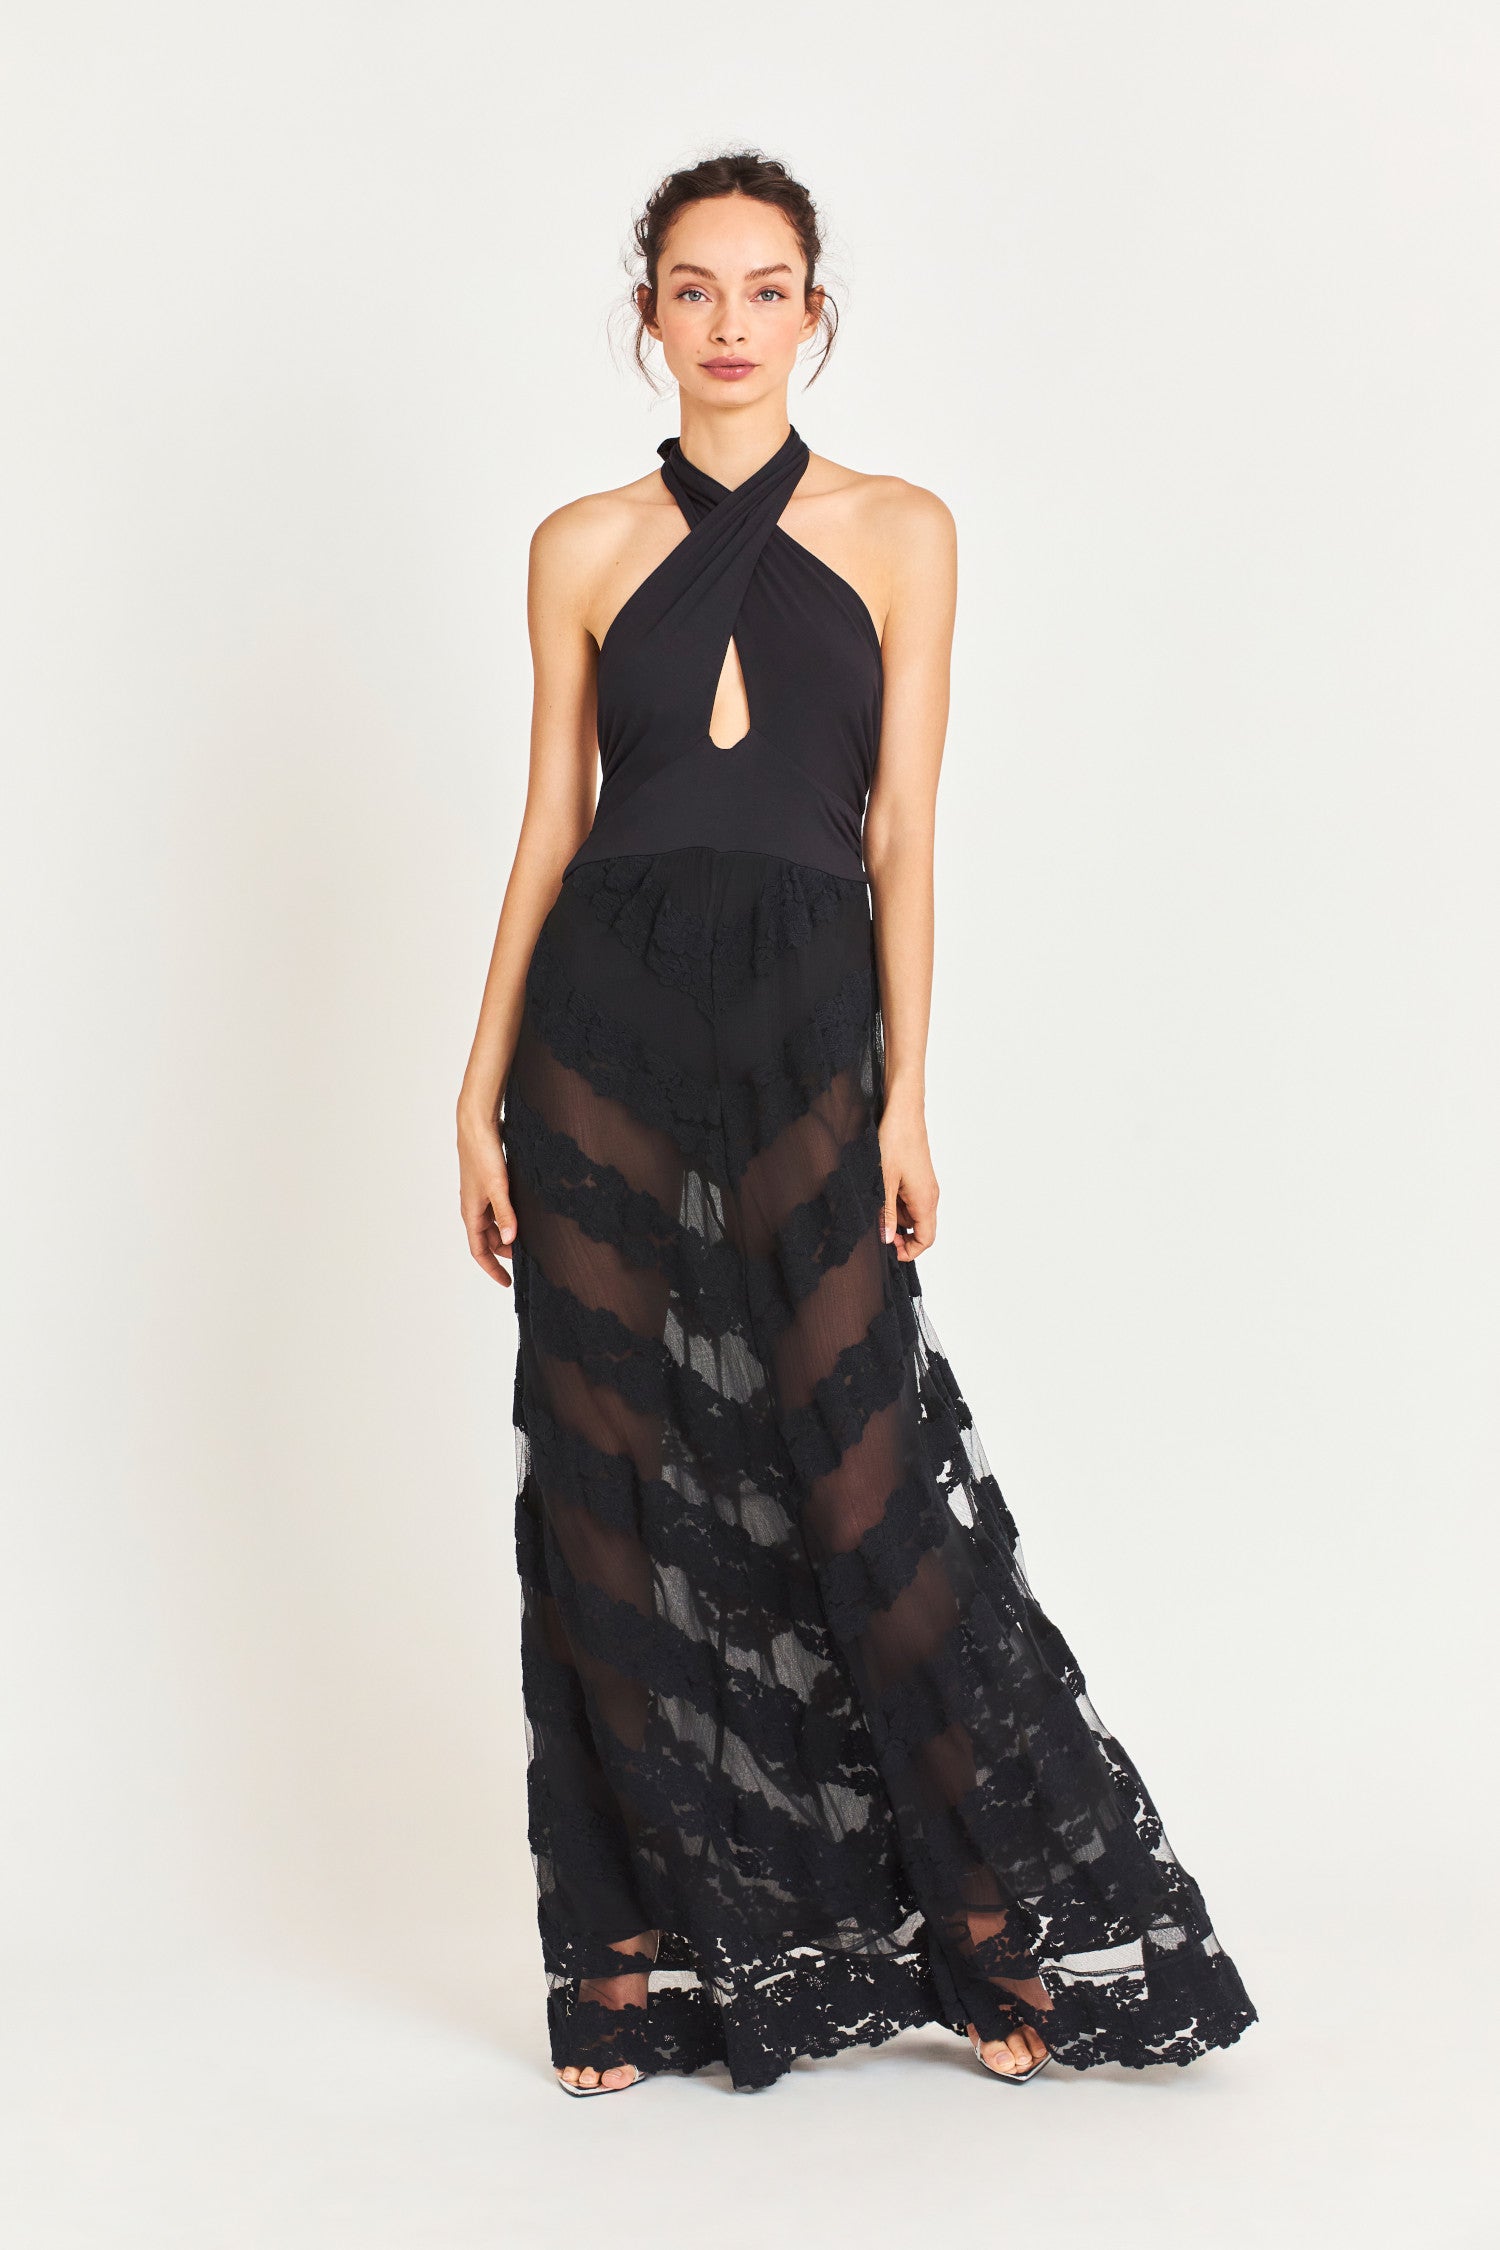 Model wearing black maxi dress with sheer skirt